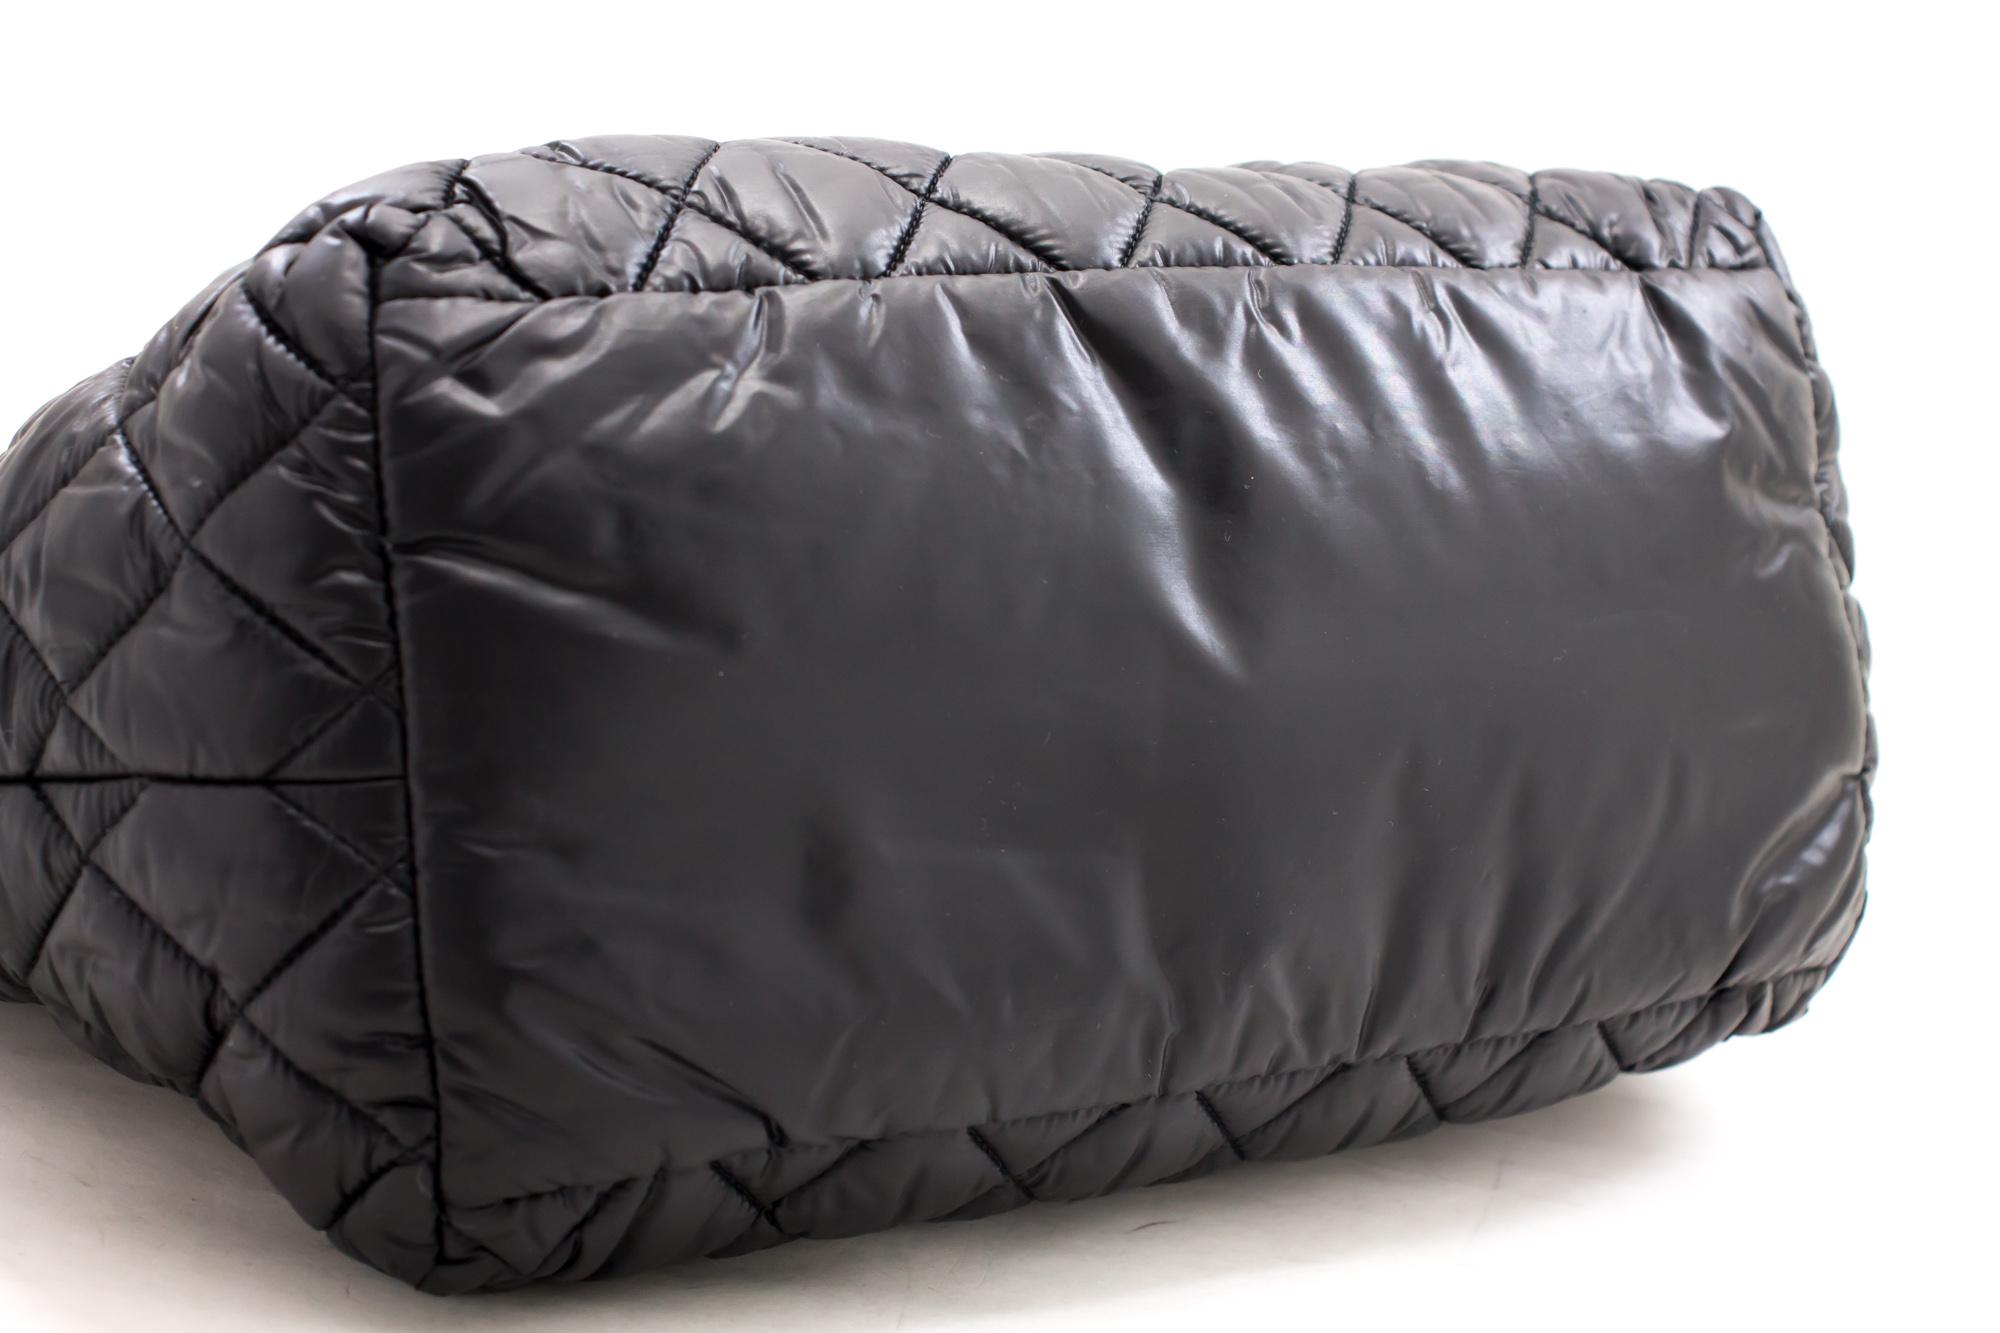 Women's CHANEL Coco Cocoon PM Nylon Tote Bag Handbag Leather Black